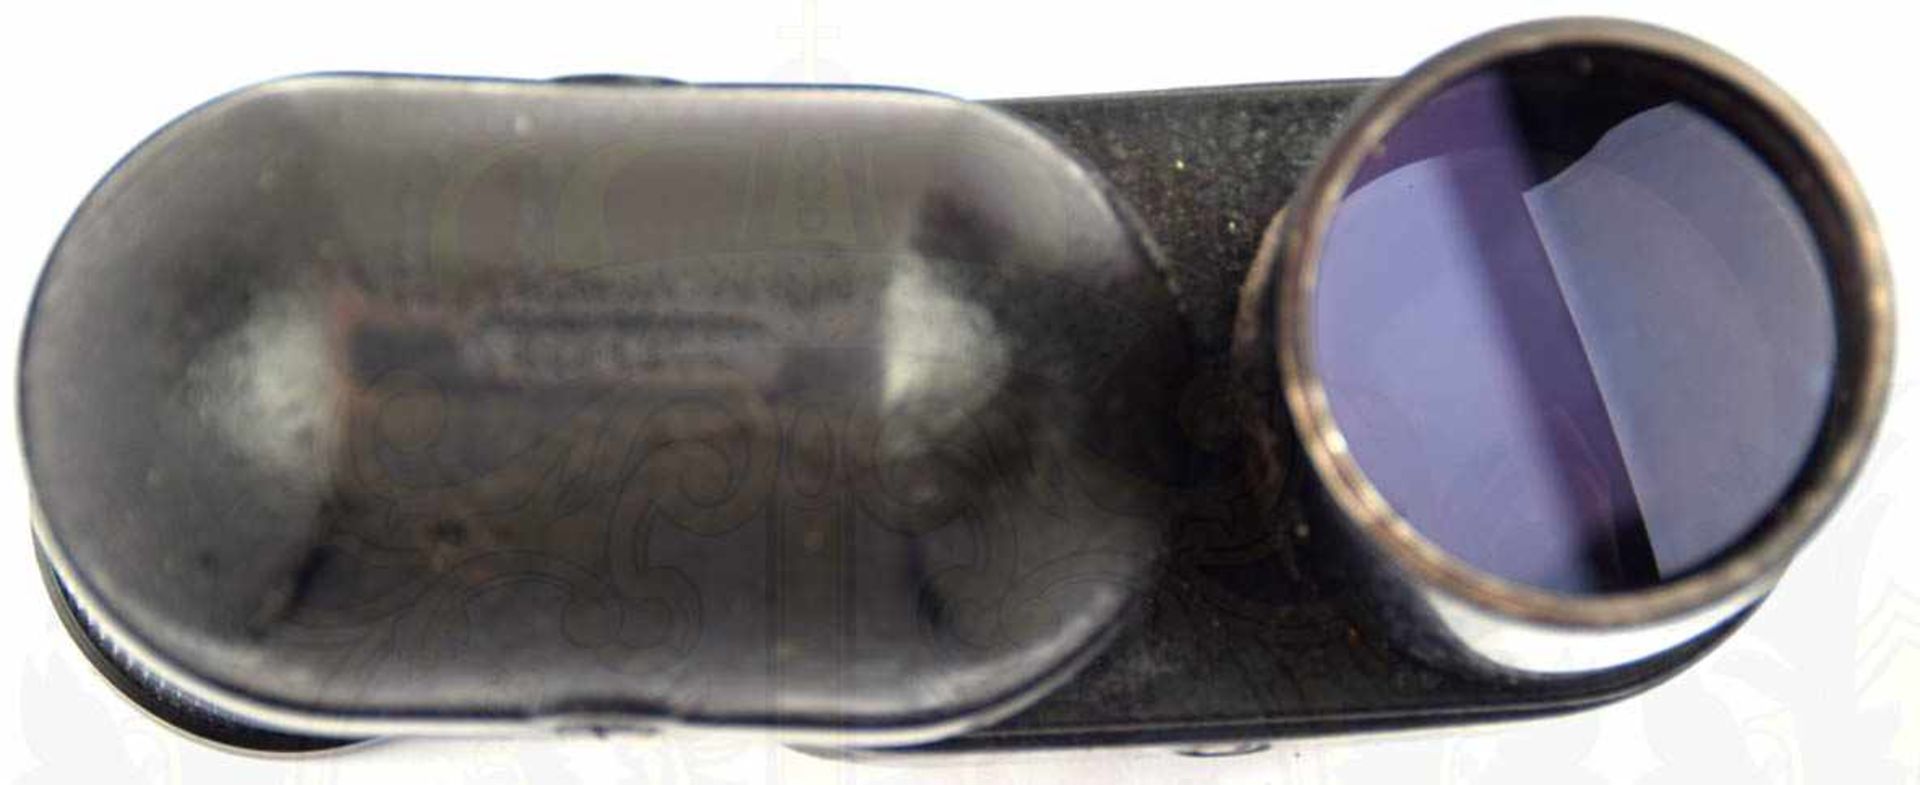 FALT-MONOKULAR TURMON, Herst. Carl Zeiss, Jena, 8-fache Vergrößerung, klare Optik, geschwärztes - Bild 2 aus 2